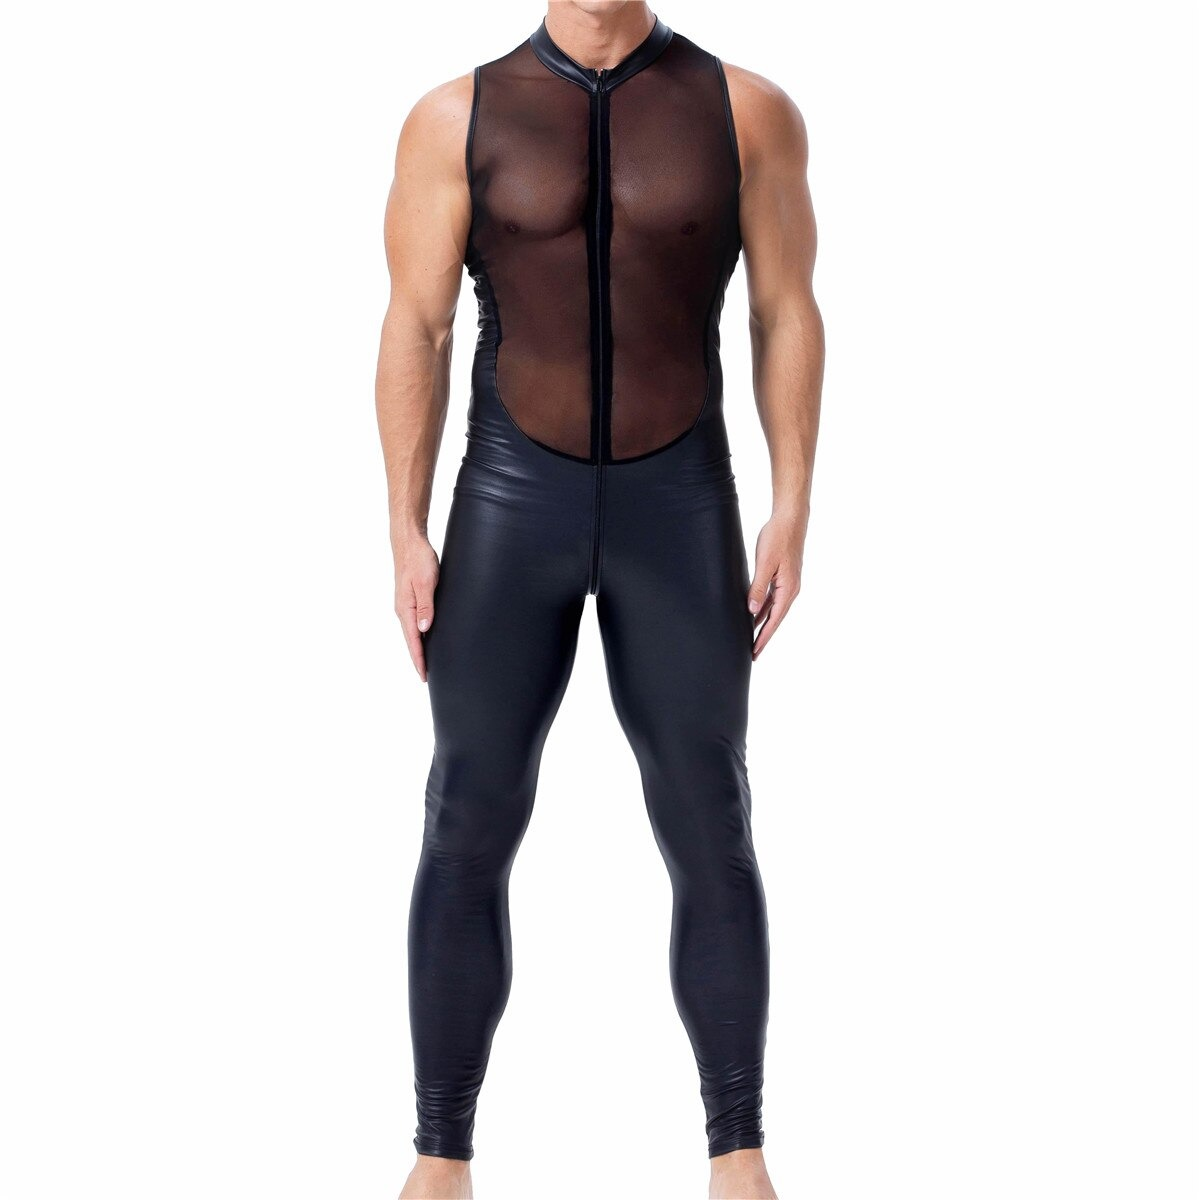 Men's PU Leather and Mesh Patchwork Jumpsuit / Sexy Male Black Zipper Sleeveless Bodysuits - EVE's SECRETS